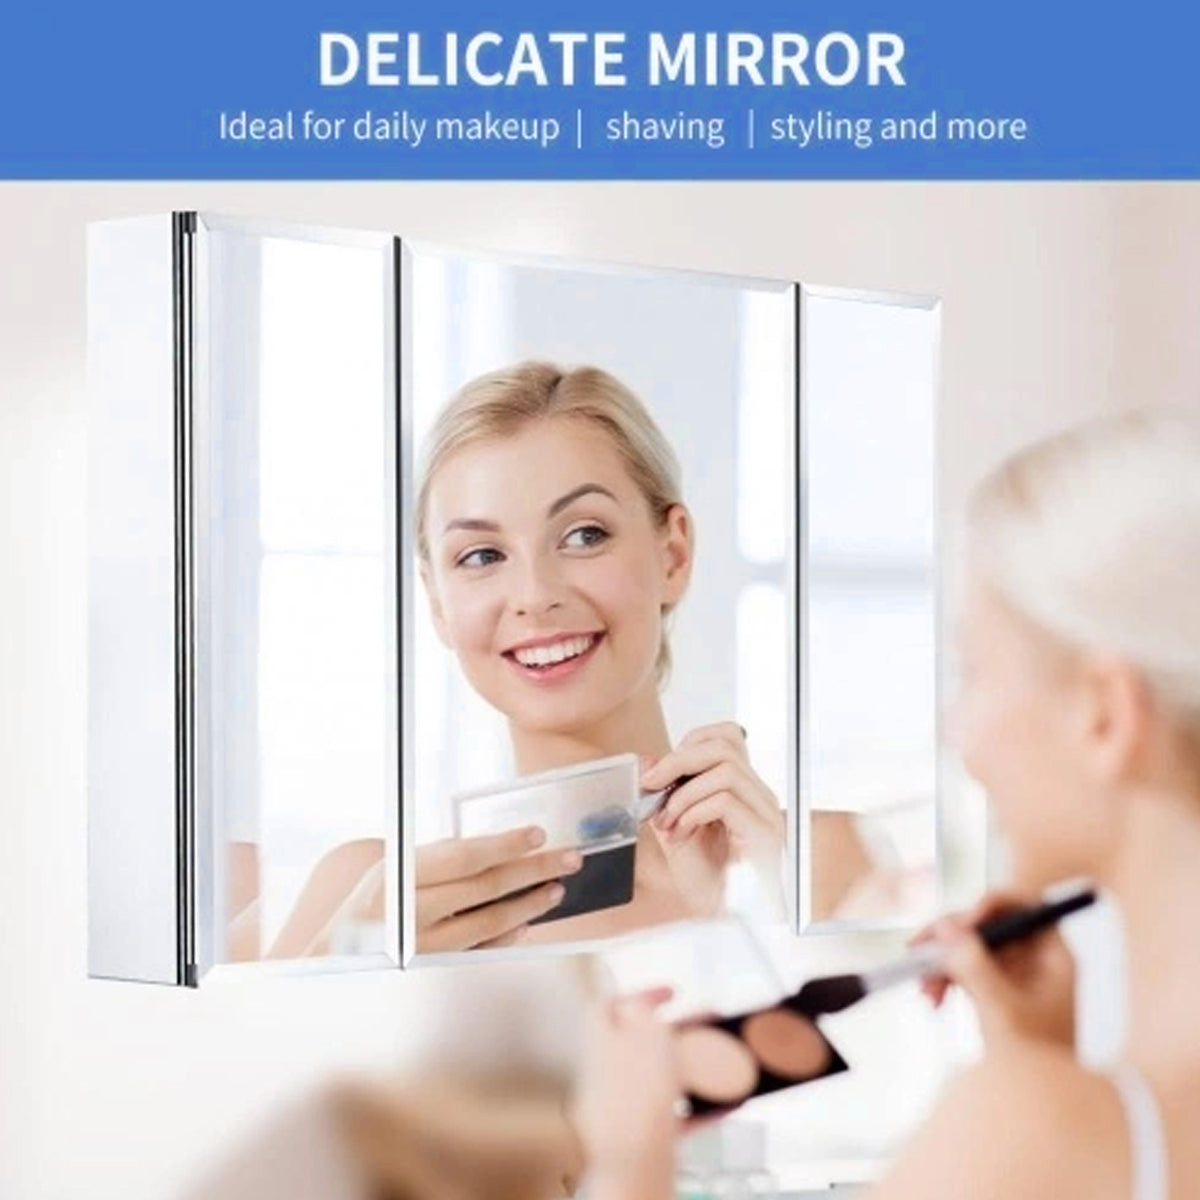 36 x 26&quot; Deluxe Frameless Medicine Cabinet: Double-Sided Mirror, 3-Door, Soft-Closing, Adjustable Shelves, for Bathroom, Bedroom, Hotel